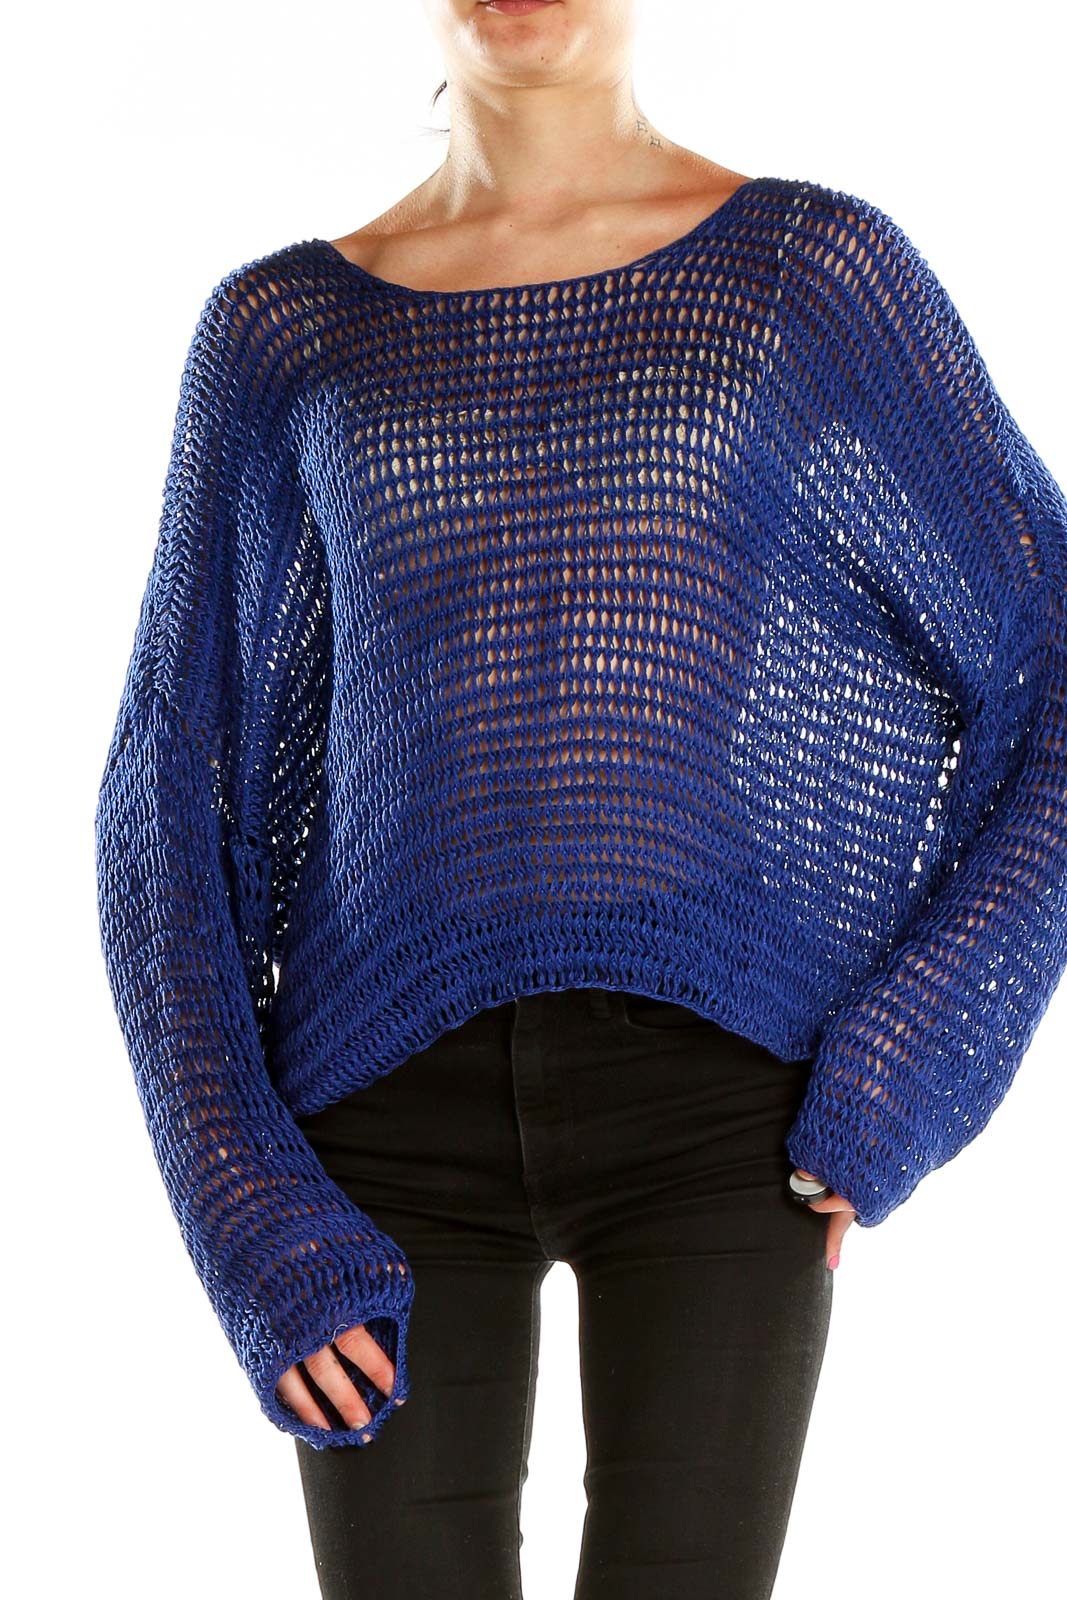 Blue Chic Crochet Top Front